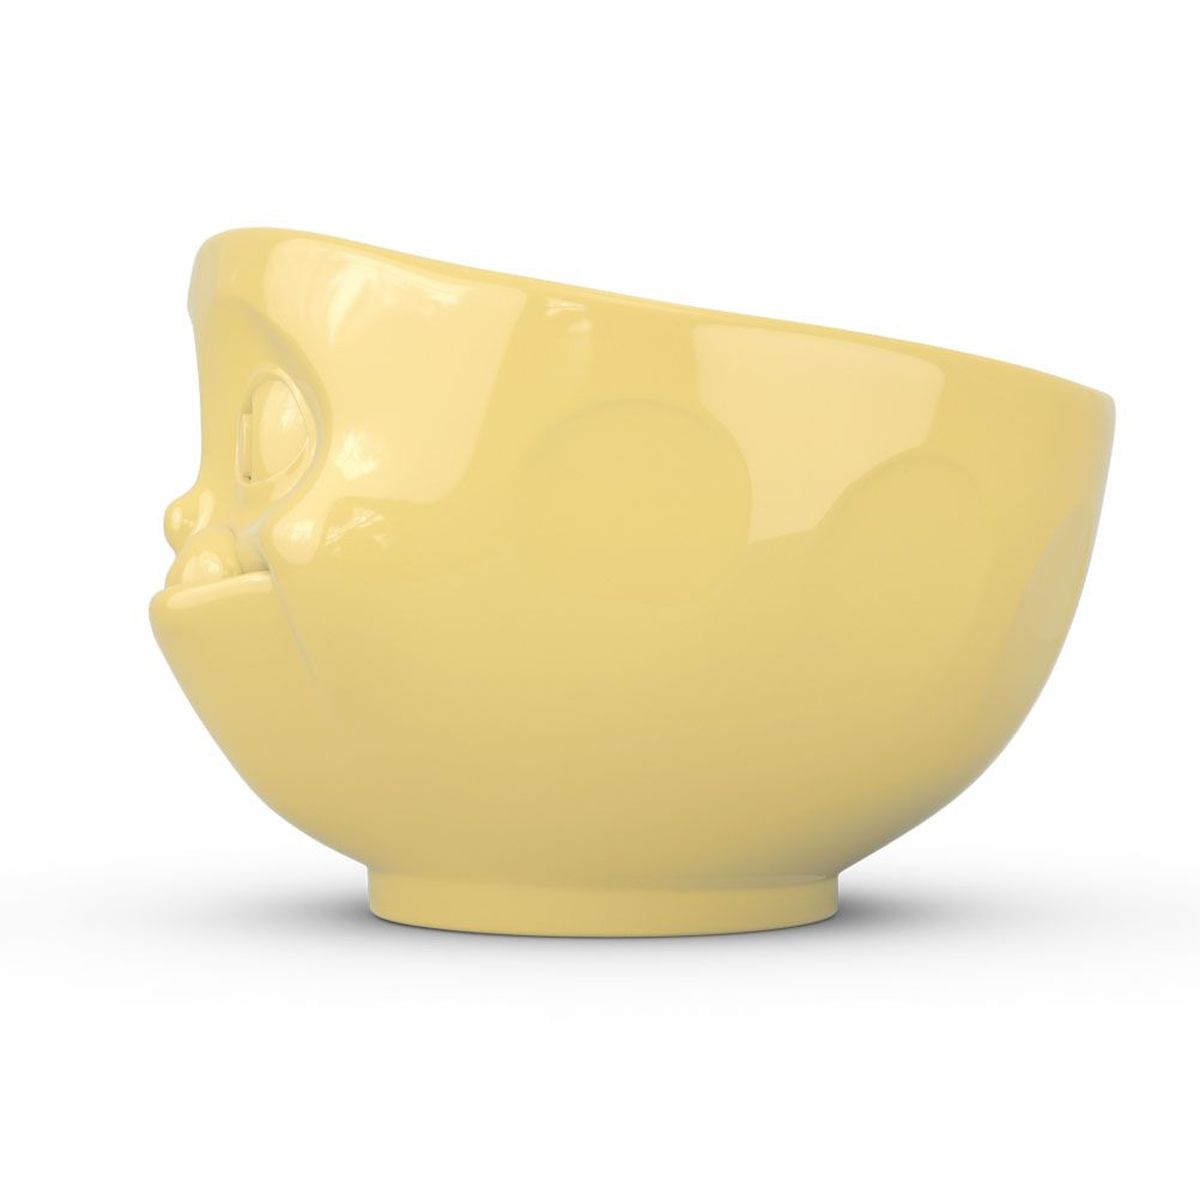 Large hotel porcelain bowl Tassen - Tasty yellow